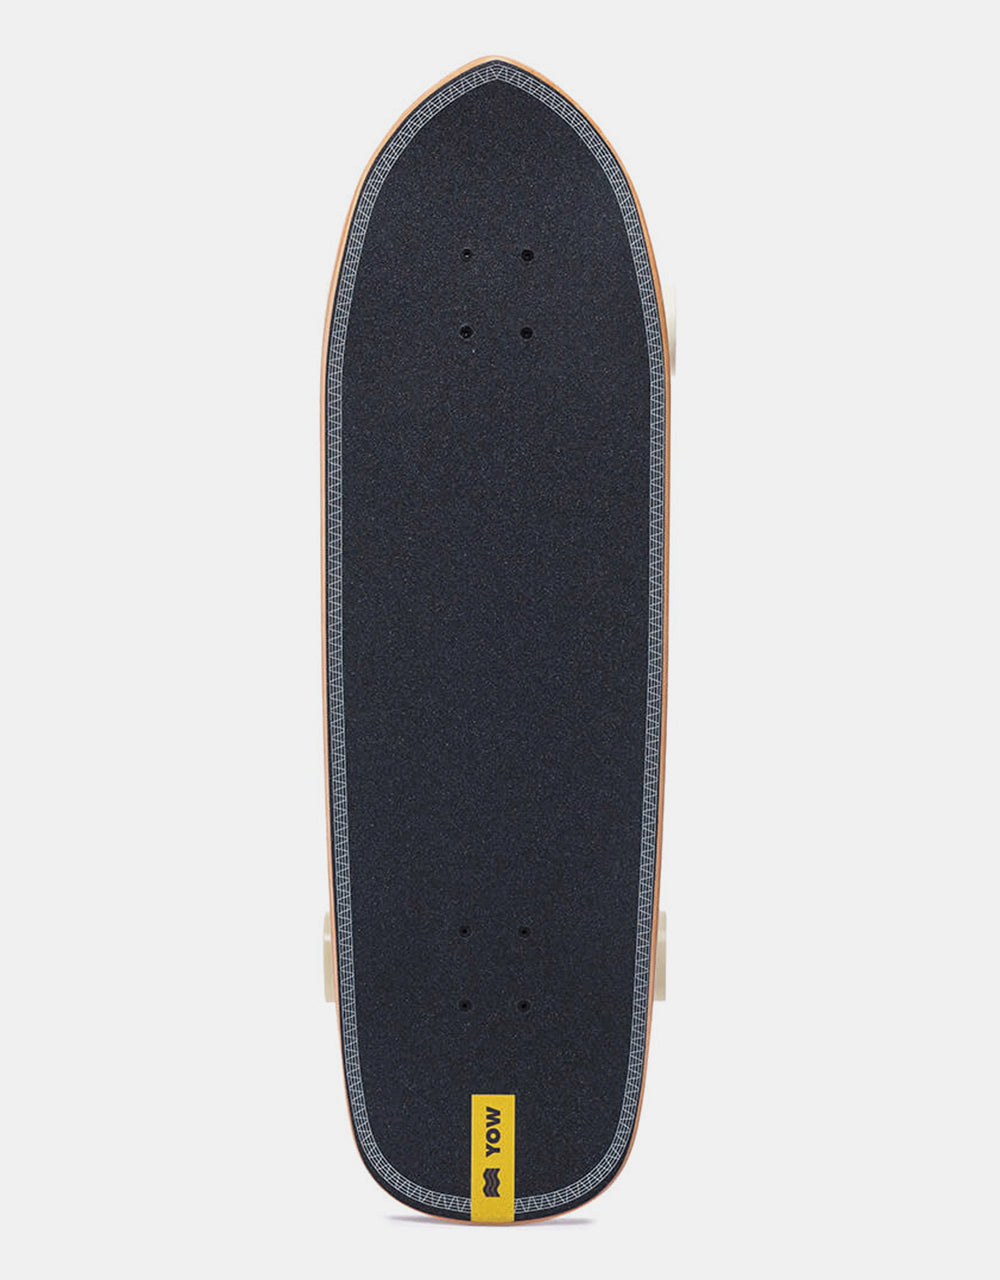 YOW Mundaka SurfSkate Cruiser Skateboard - 9.5" x 32"